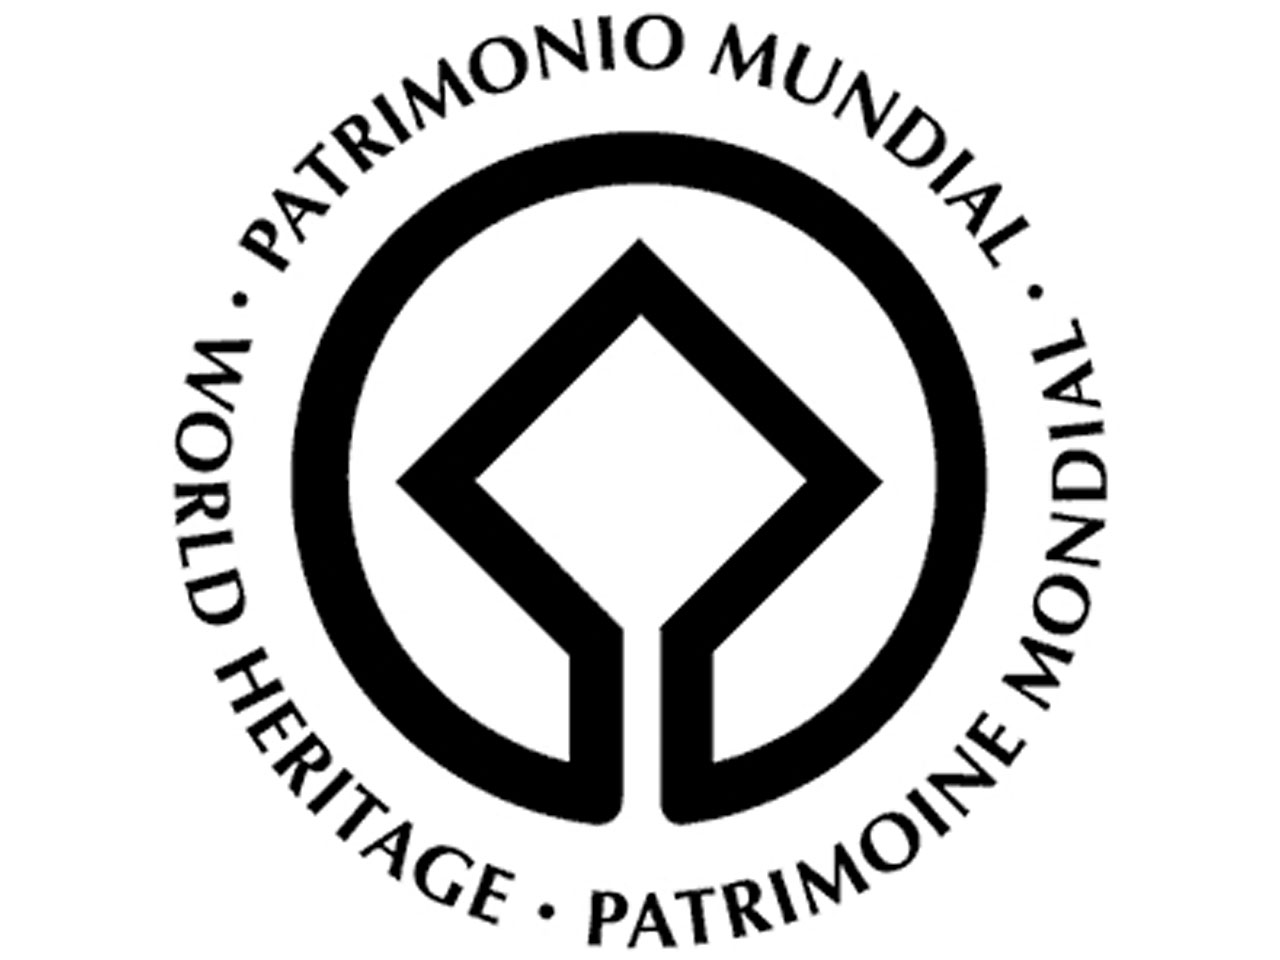 World Heritage